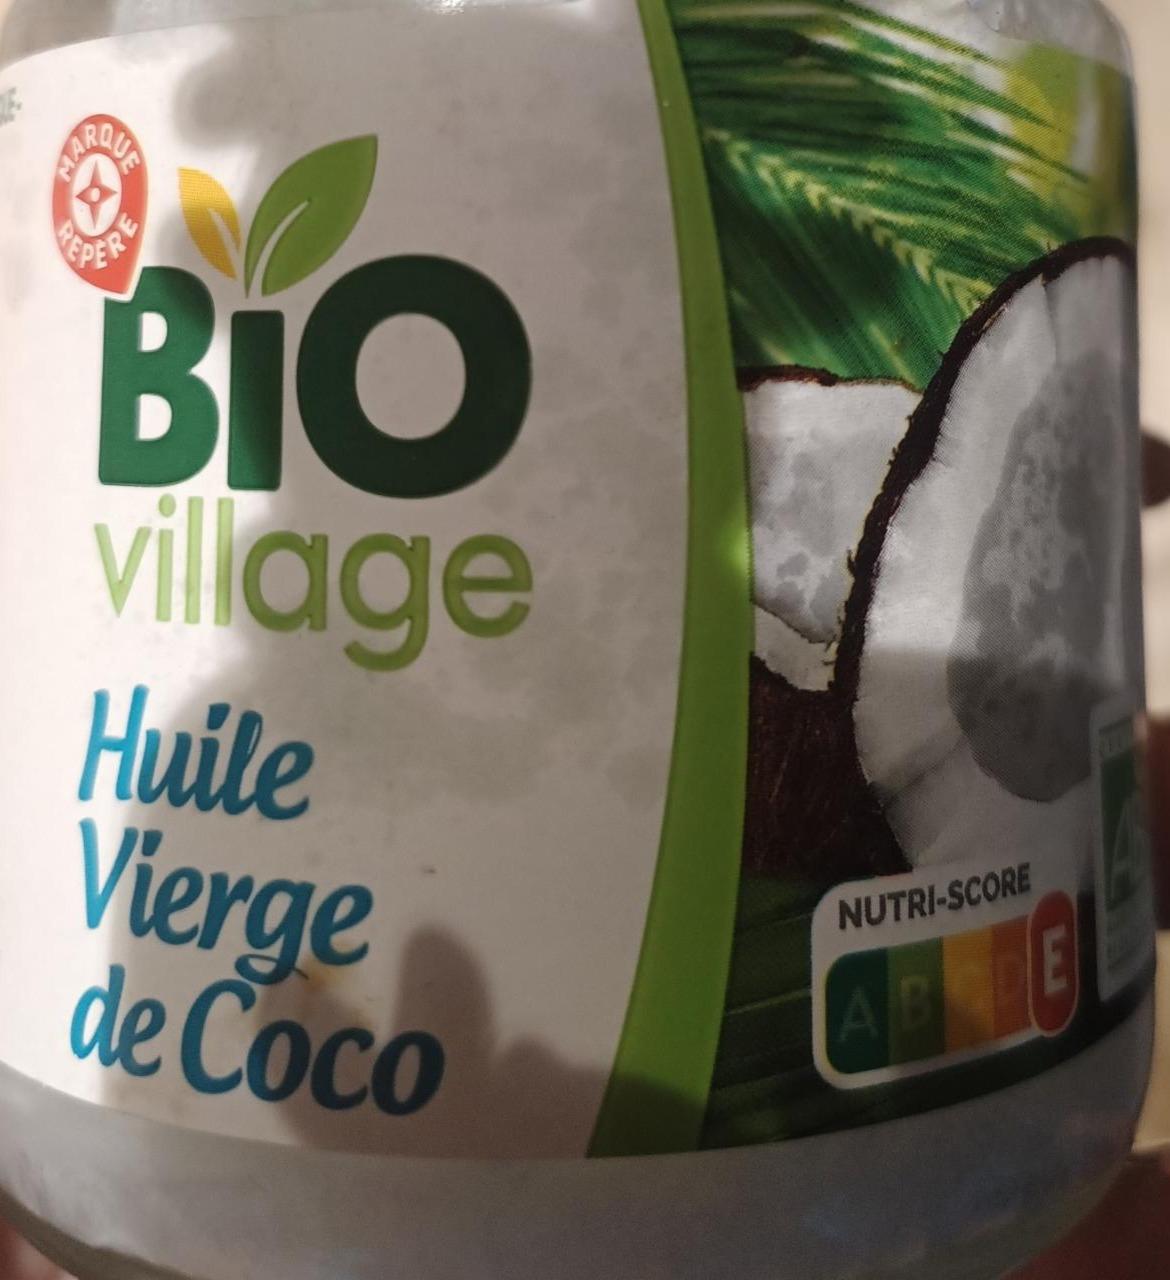 Fotografie - Huile vierge de coco Bio Village